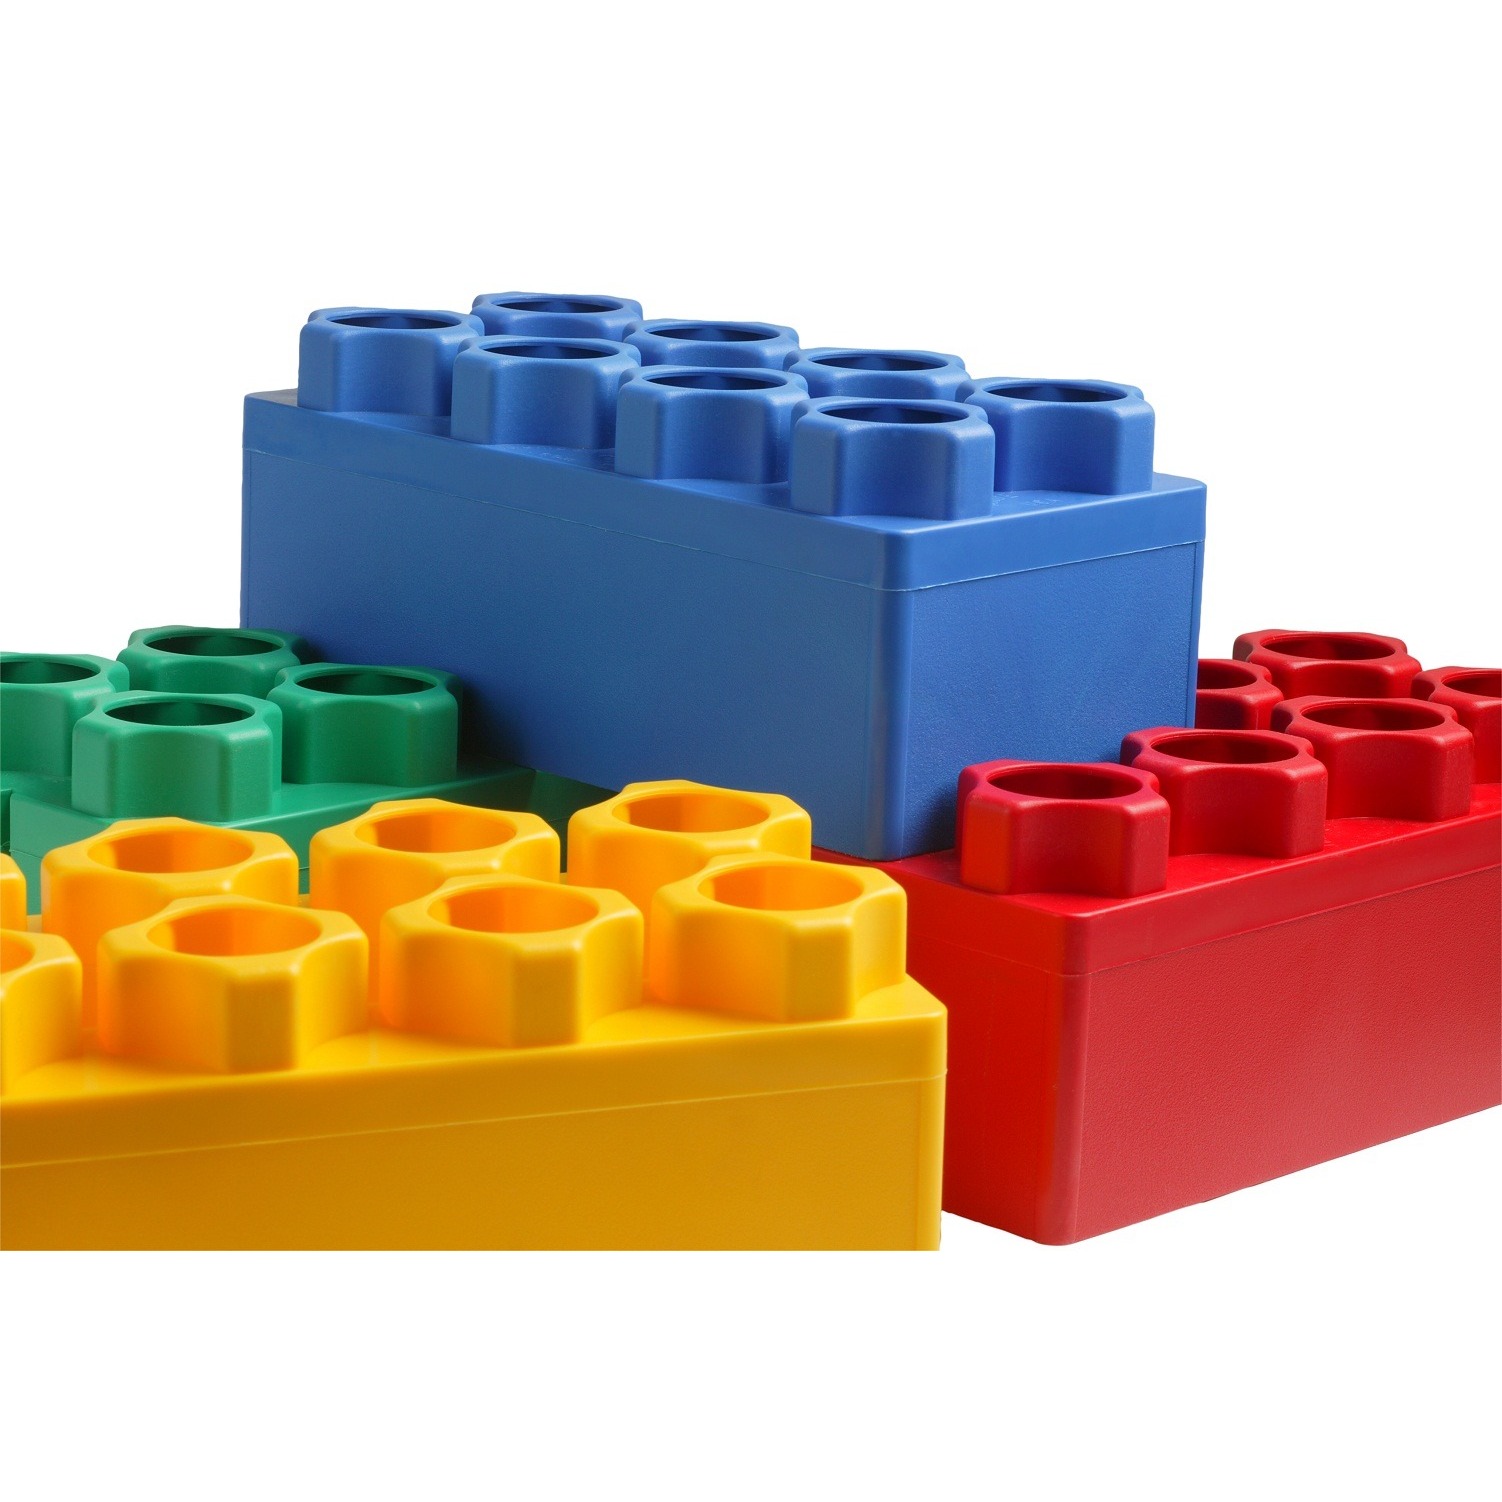 jumbo lego blocks for sale